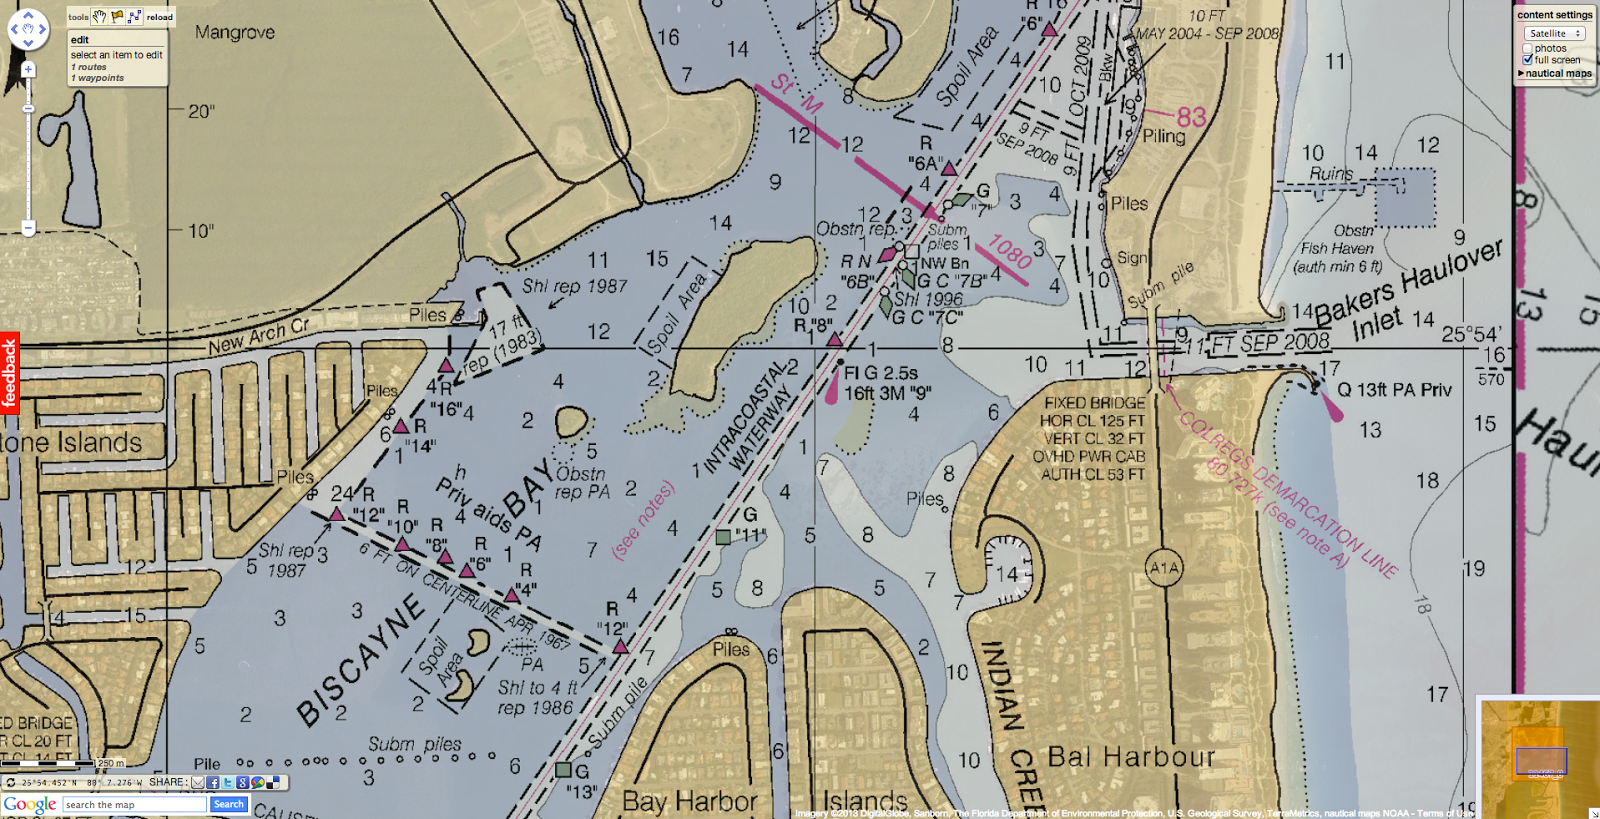 Intracoastal Waterway Nautical Charts